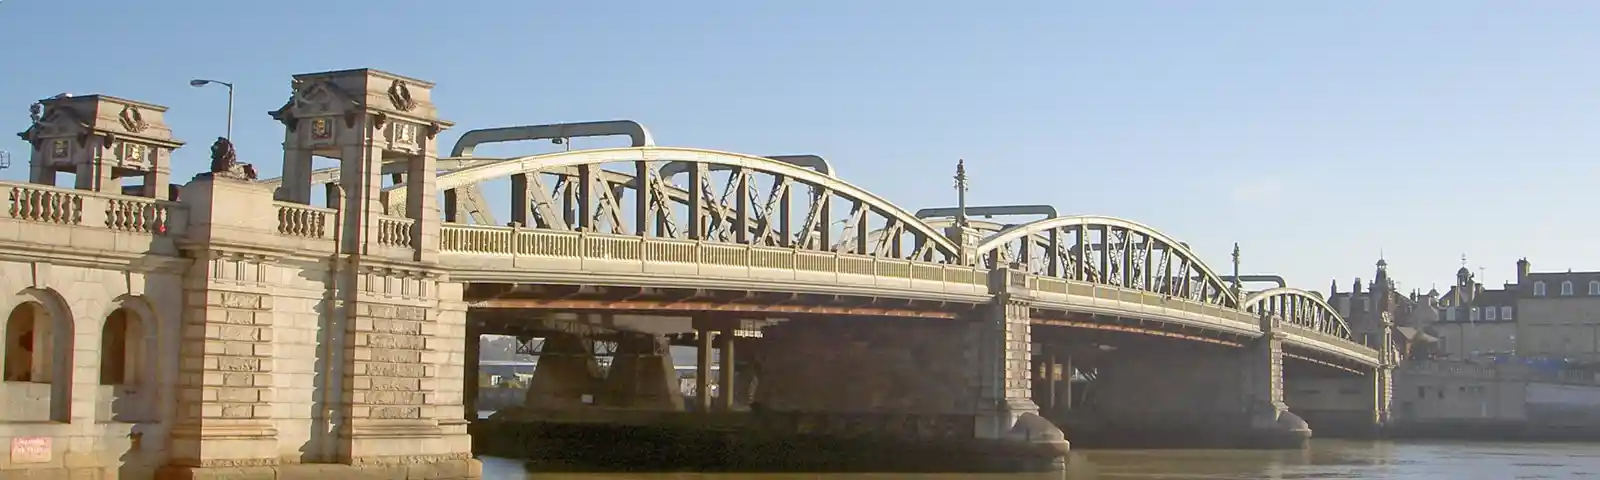 Rochester bridge.jpg